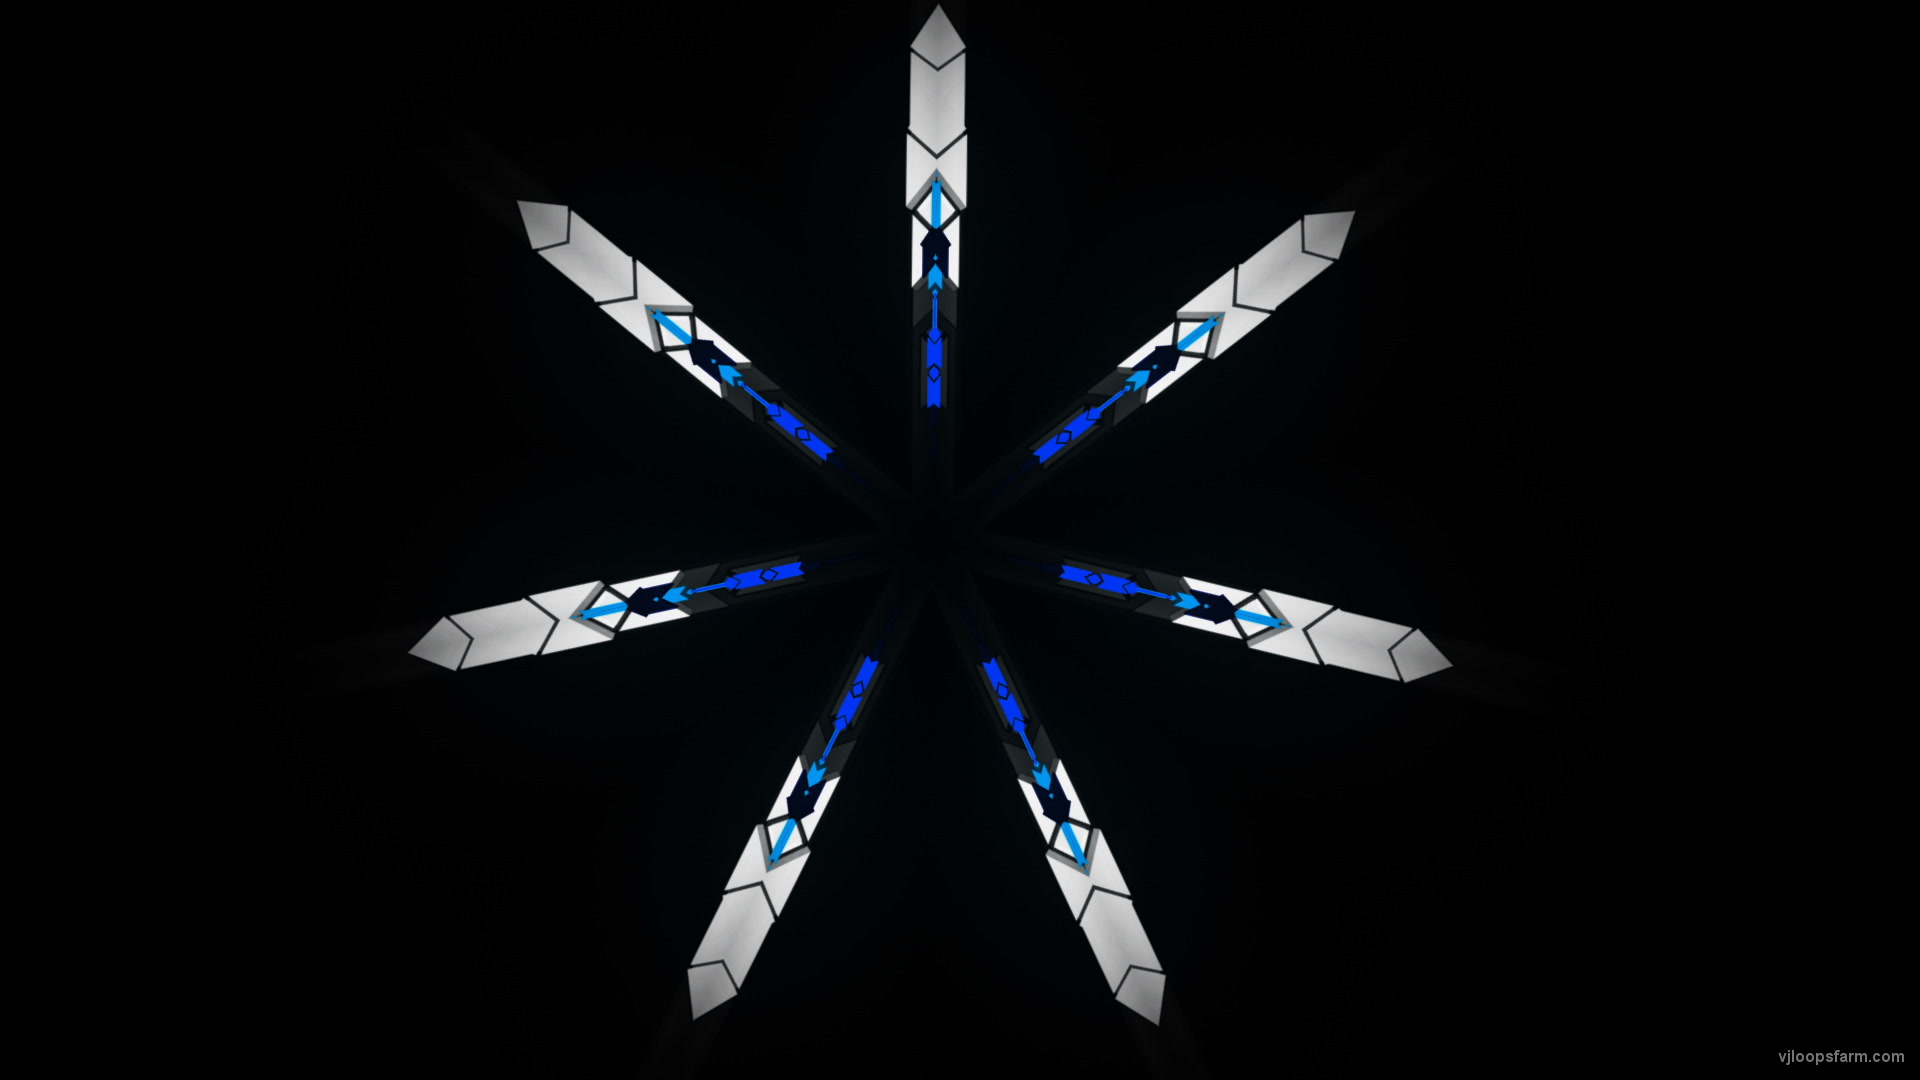 Septener Star Of The Magicians blue geometric 7 points symbolik snowflake video art vj loop